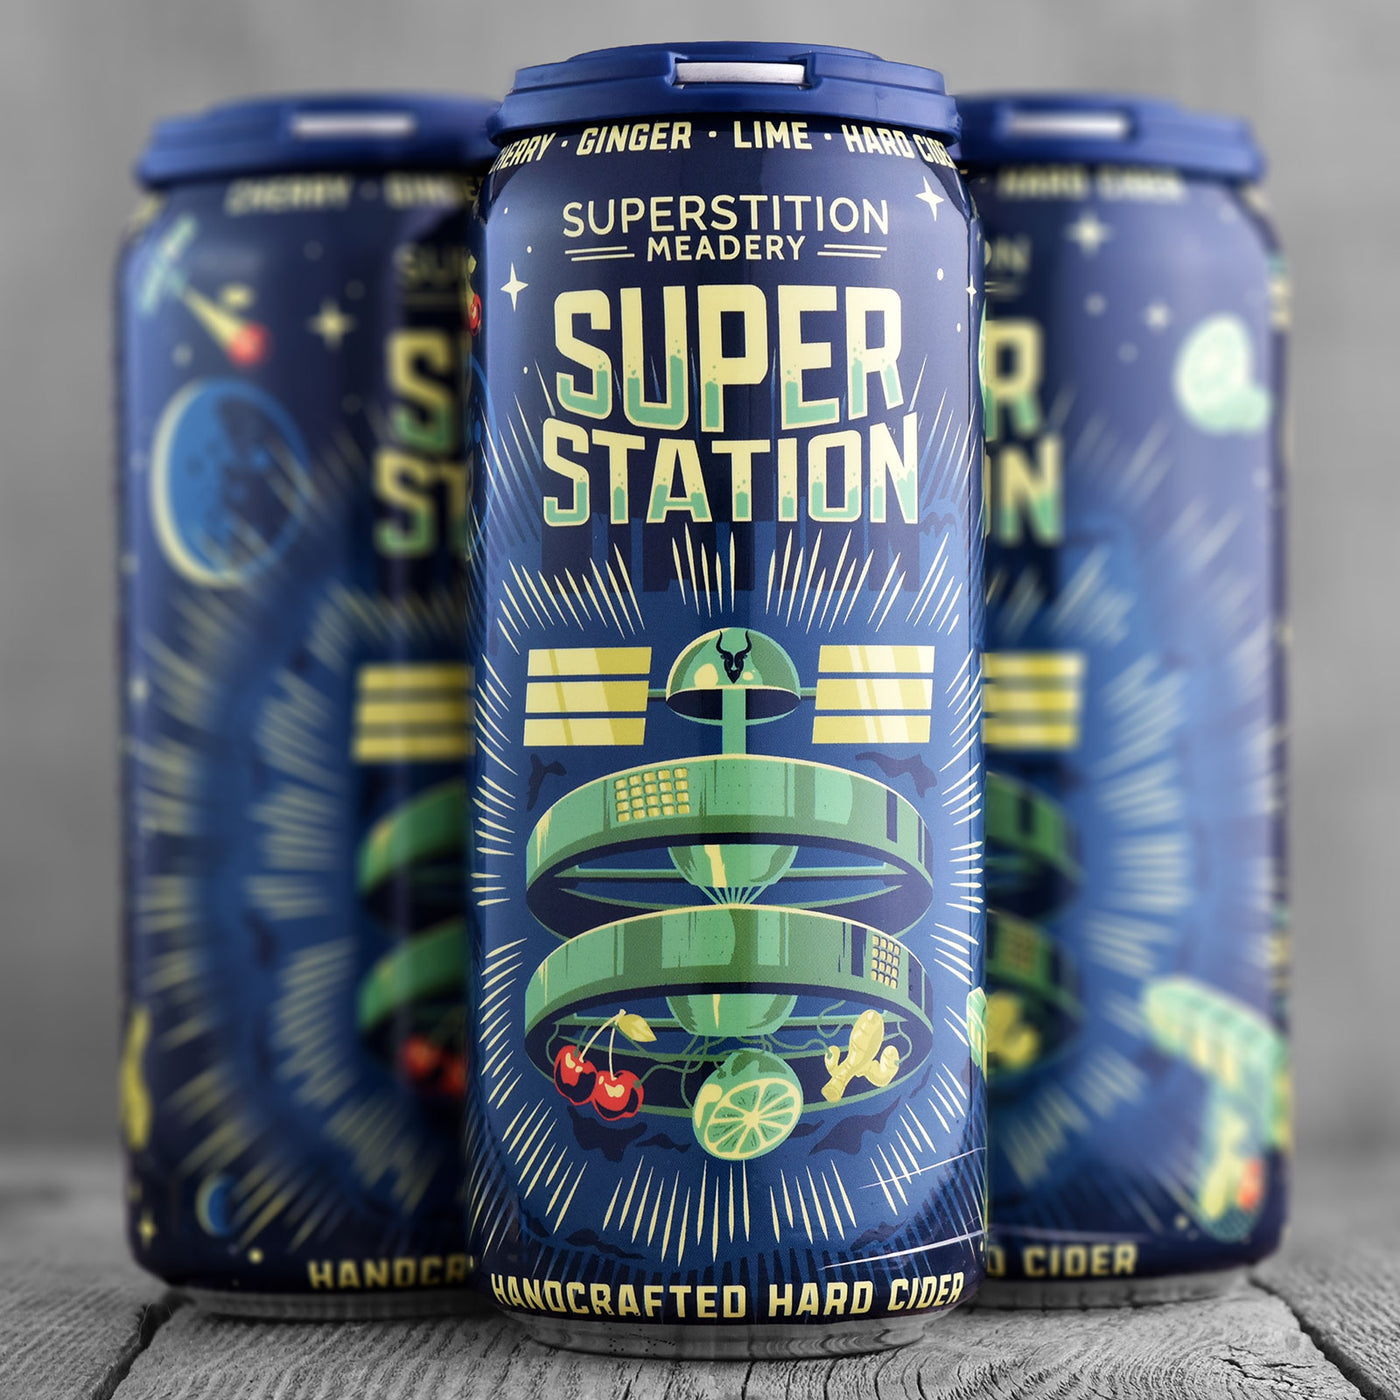 Superstition / Newtopia Cyder - Super Station